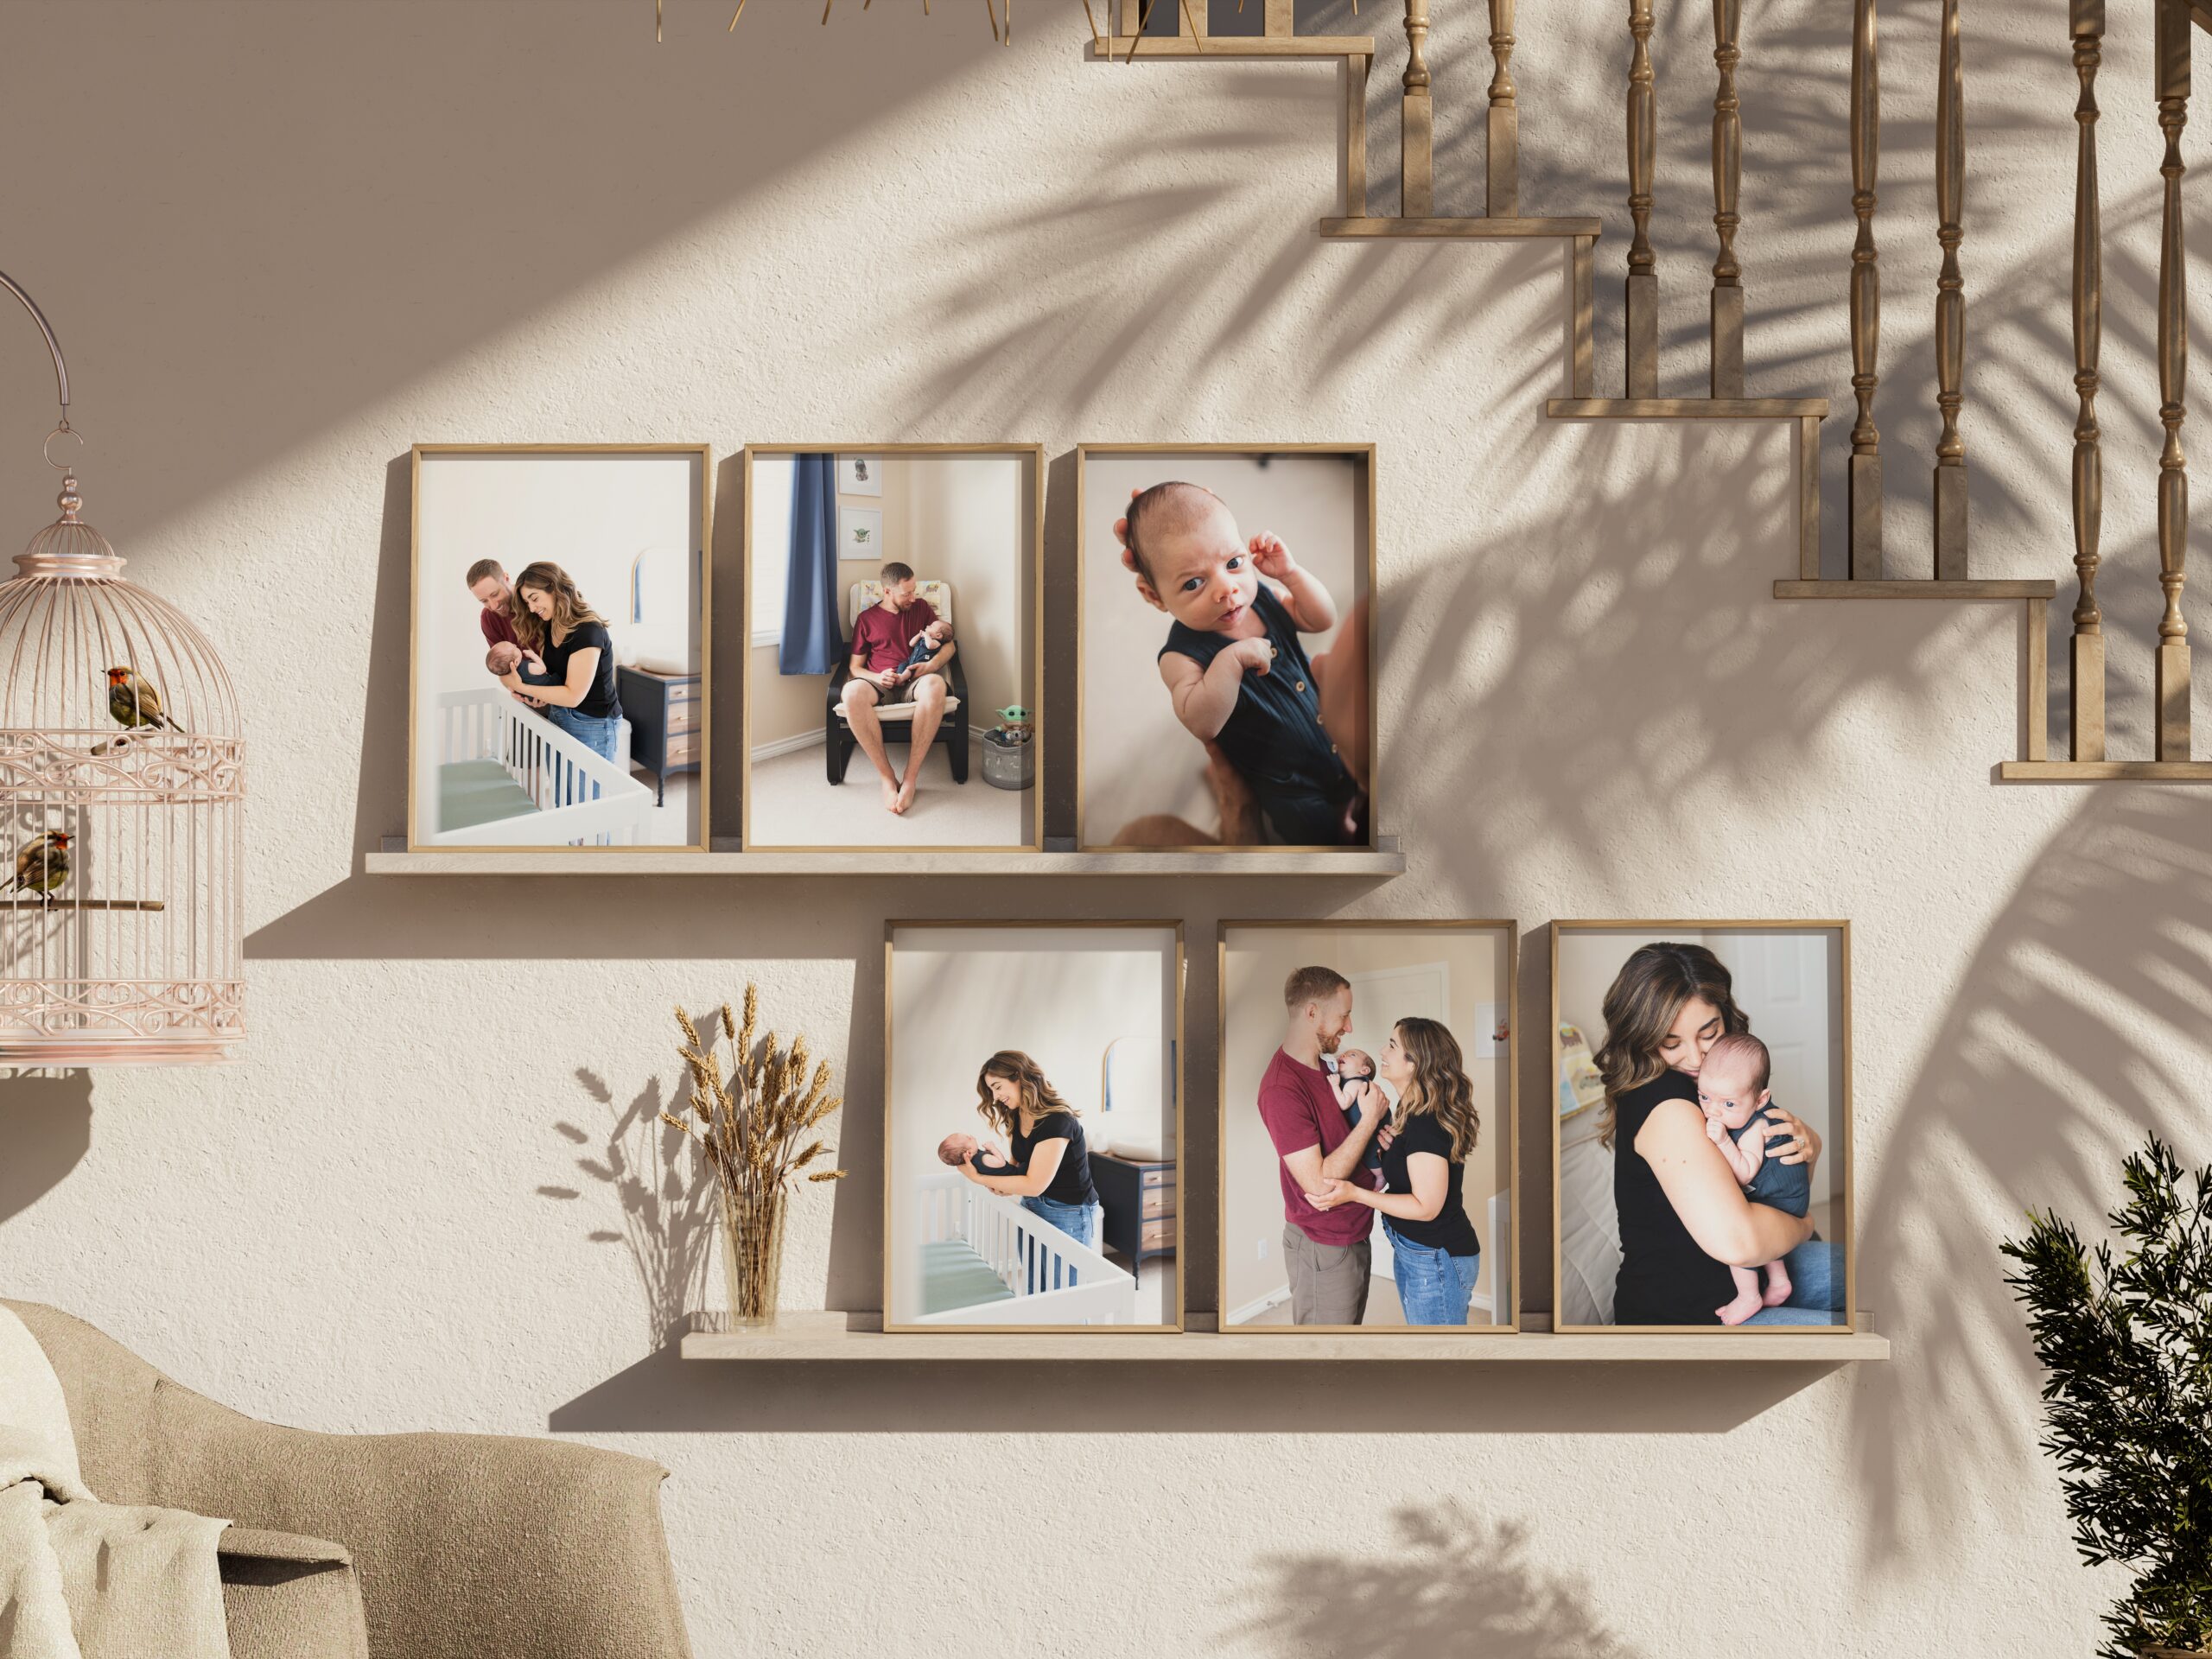 newborn photos displaying on photo ledge on wall.